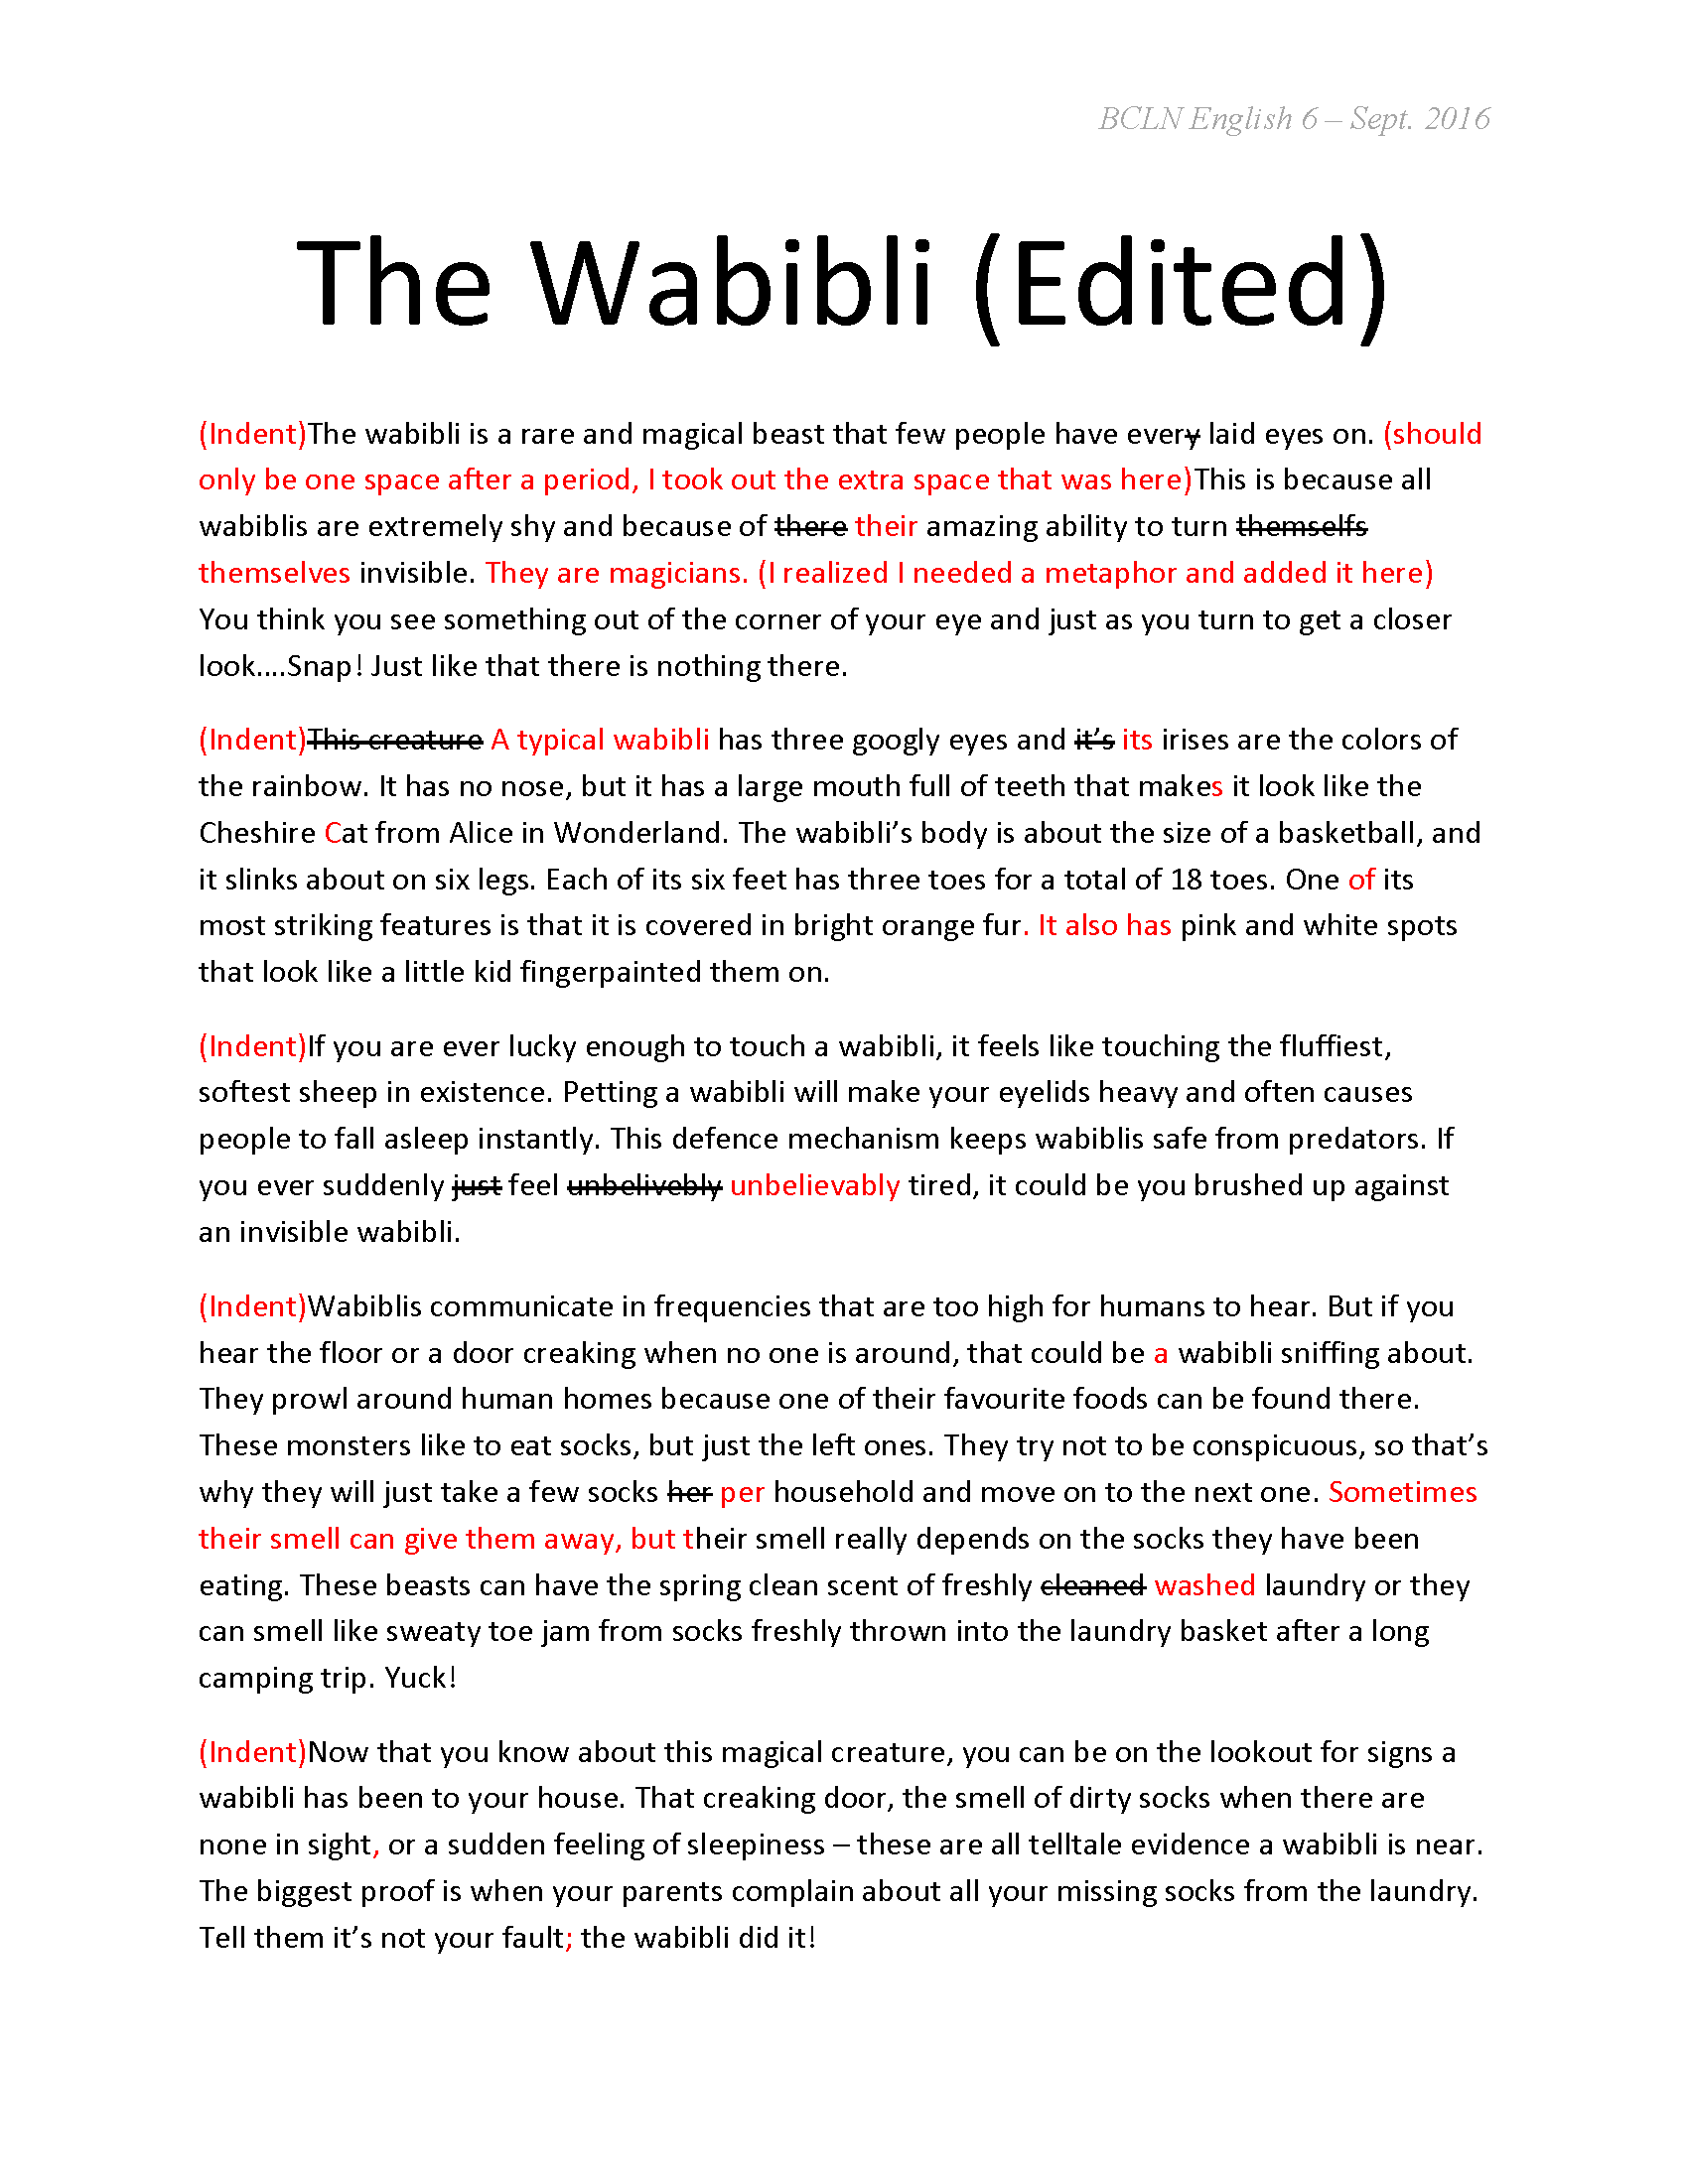 The Wabibli Edited